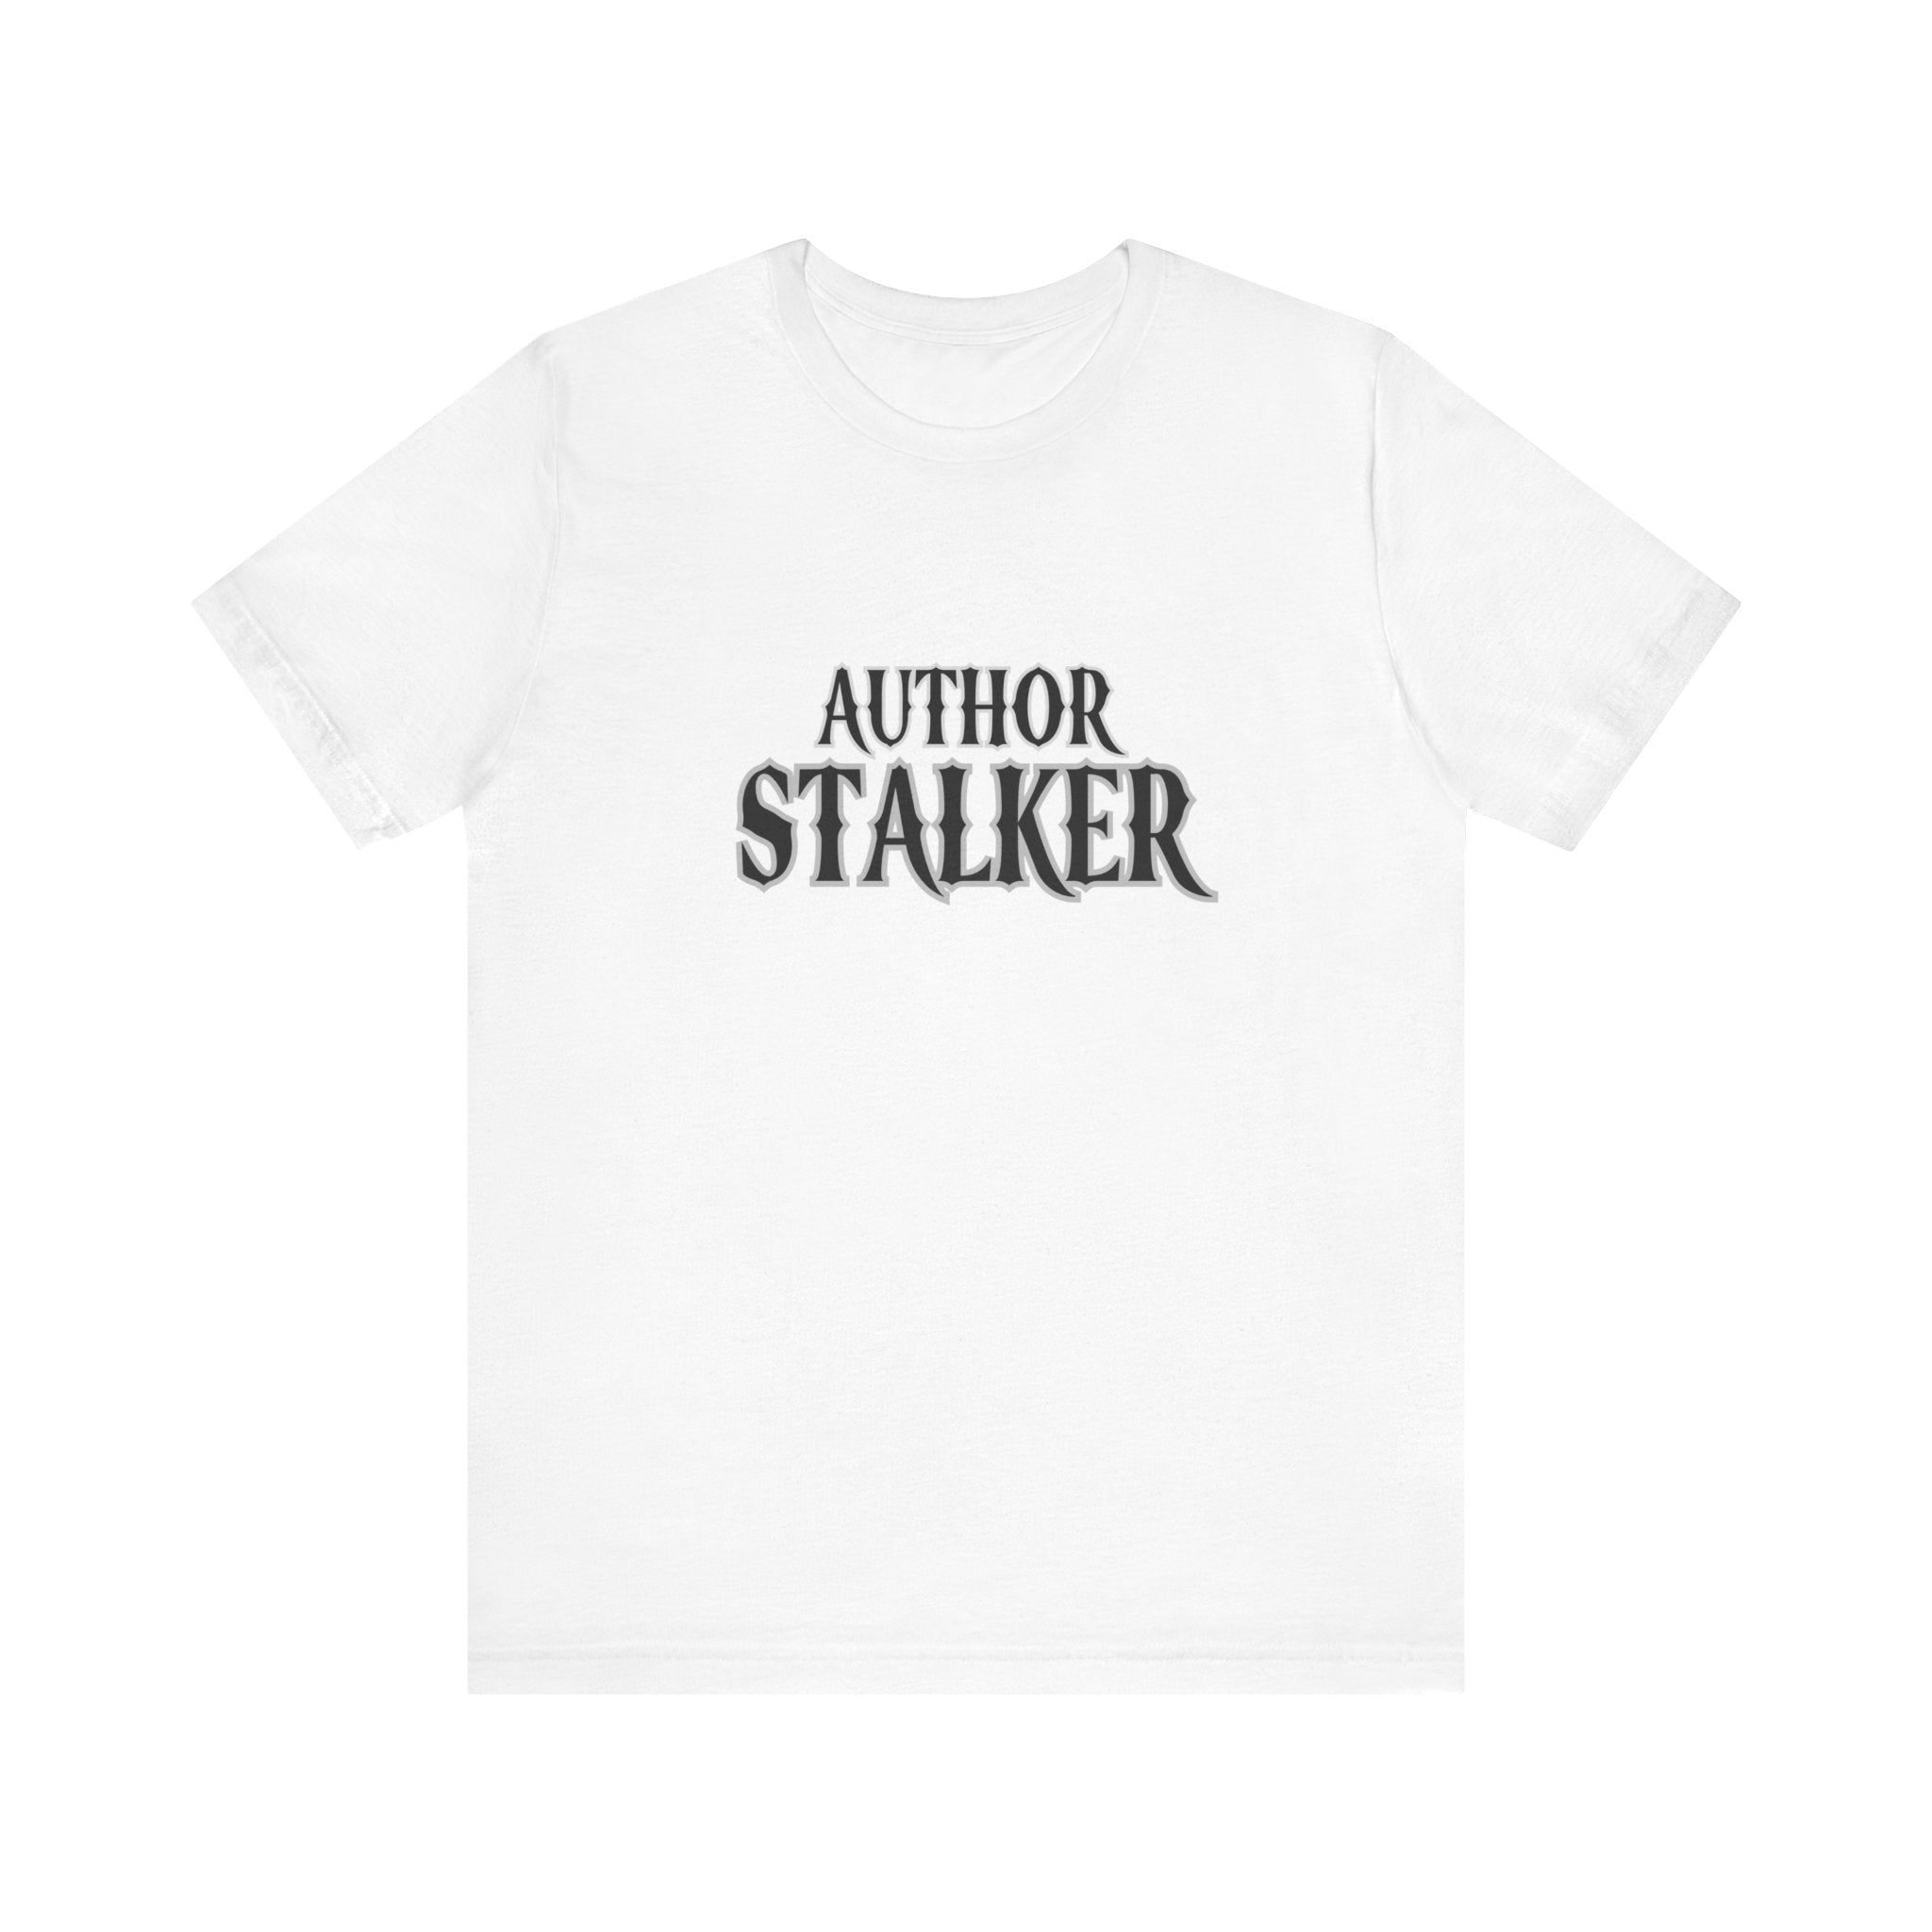 Author Stalker Tee